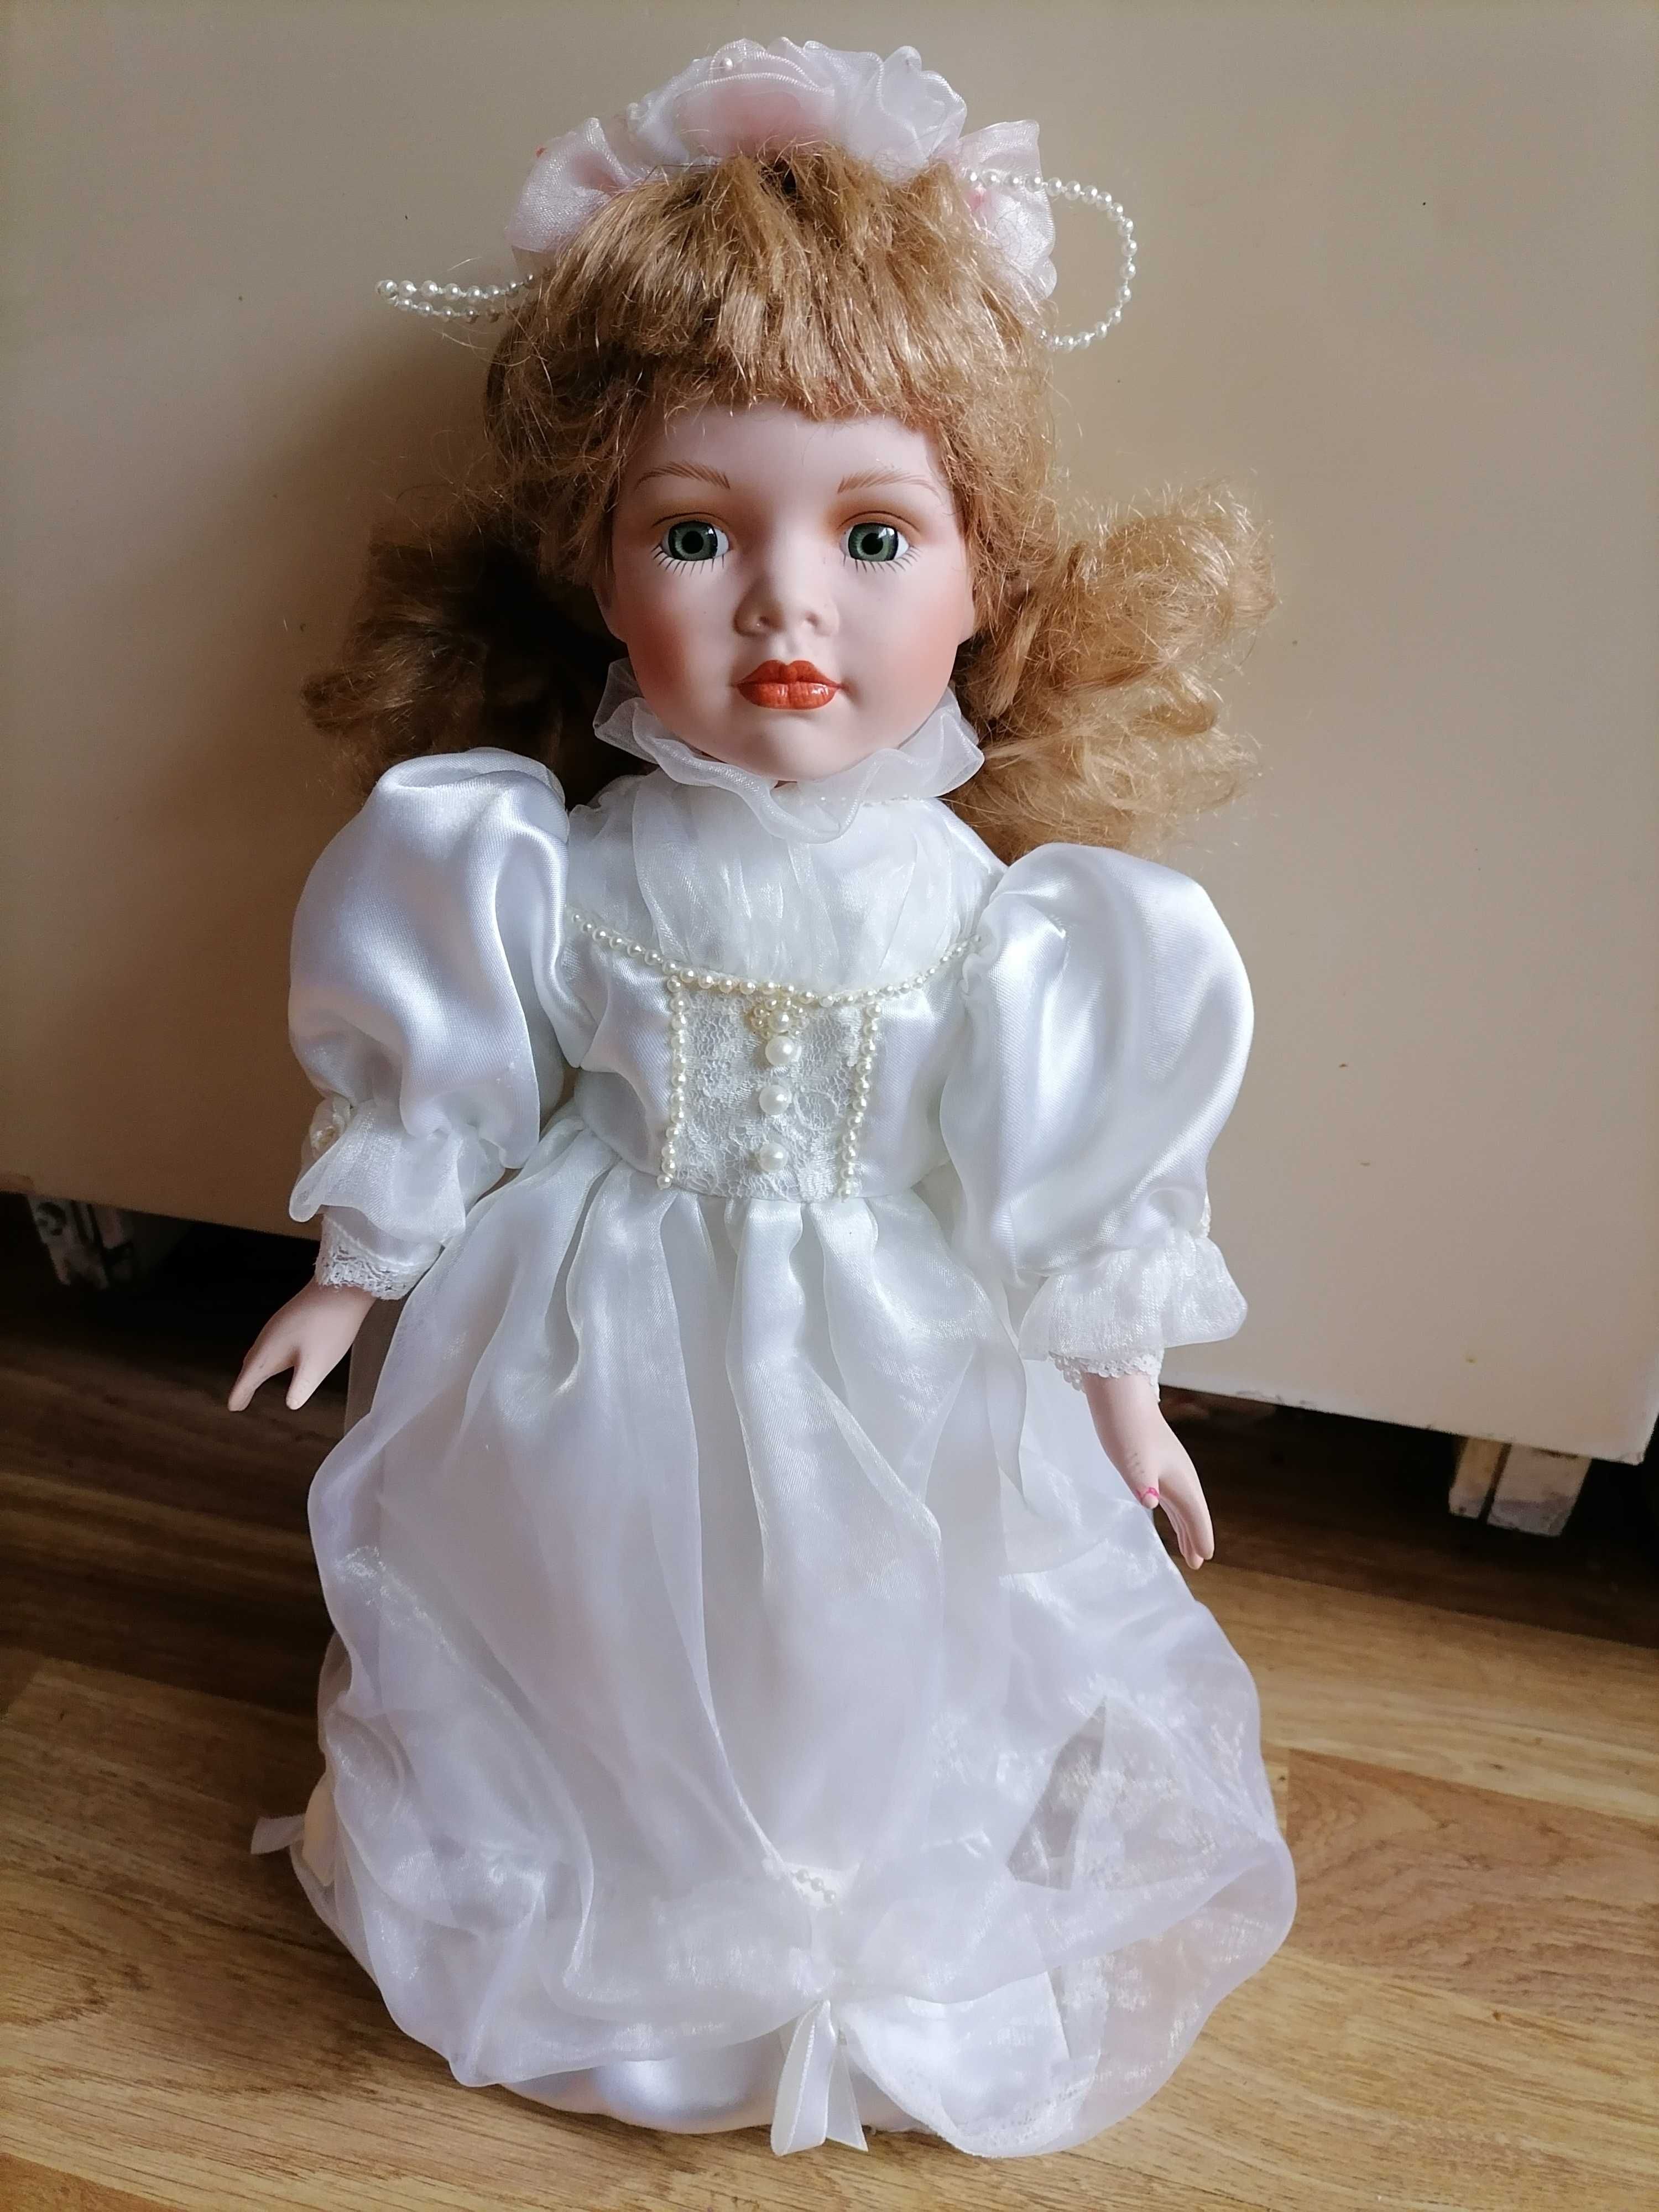 кукла  невеста керамик 45см  антиквариат испания реонардо